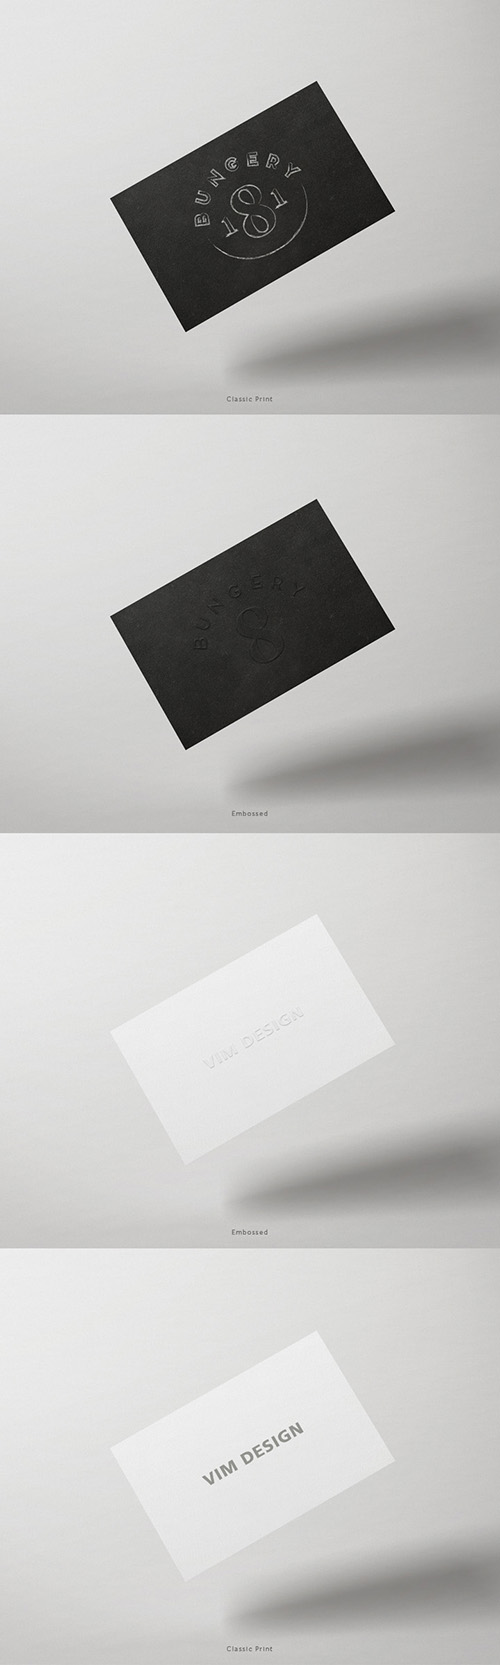 PSD Sorce - Business Card Mock Up - Pack 2 - Black & White Paper